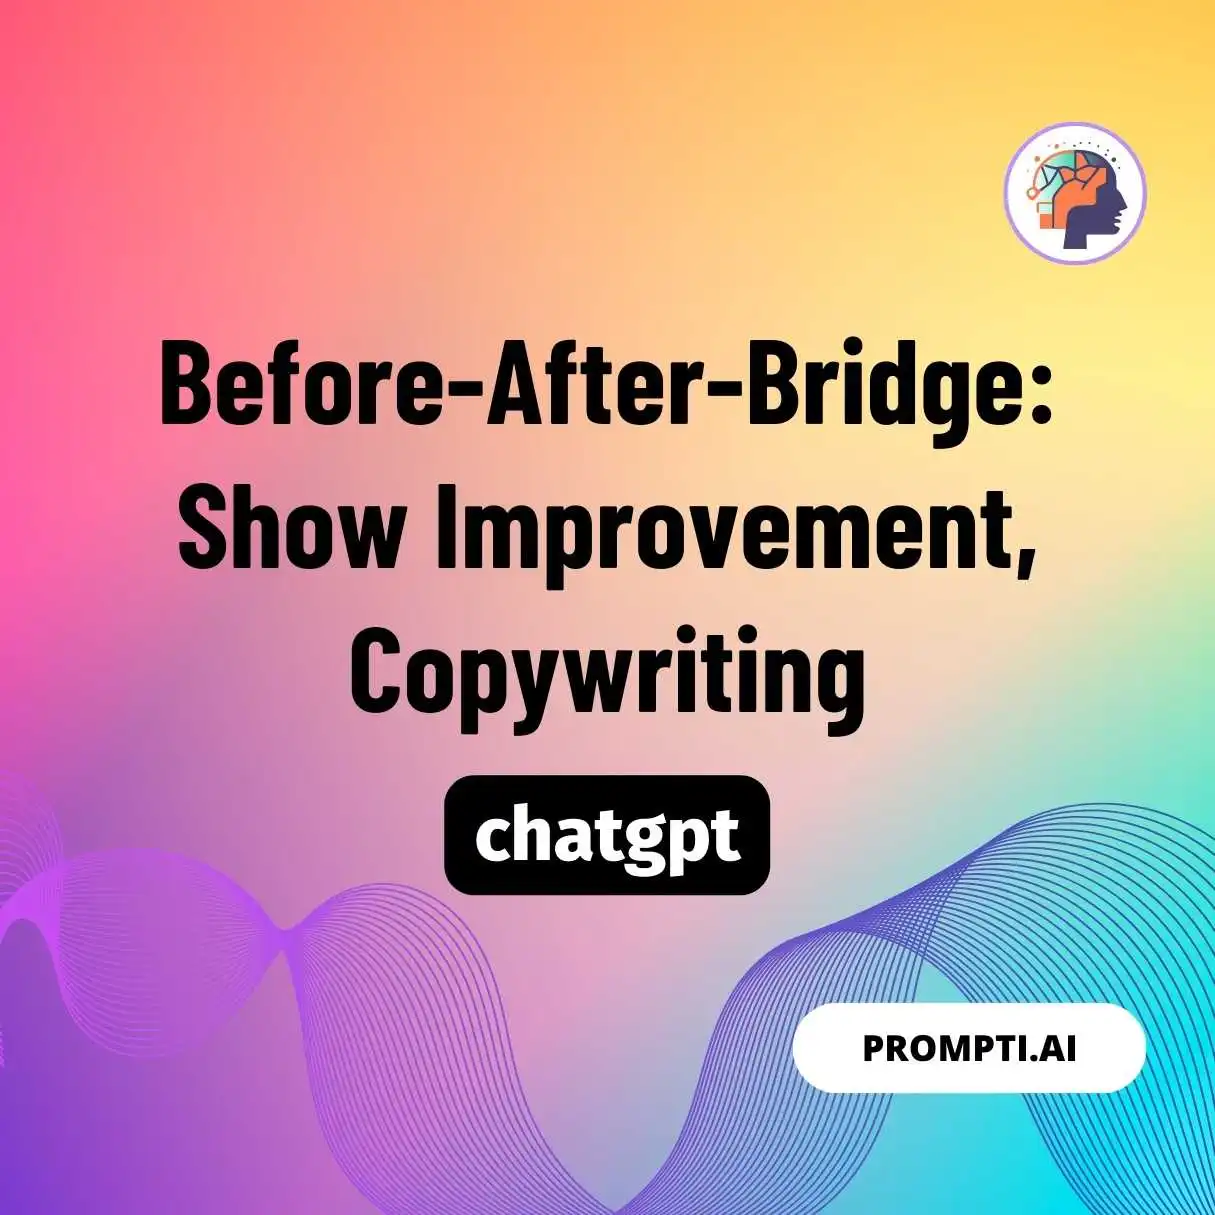 Before-After-Bridge: Show Improvement, Copywriting